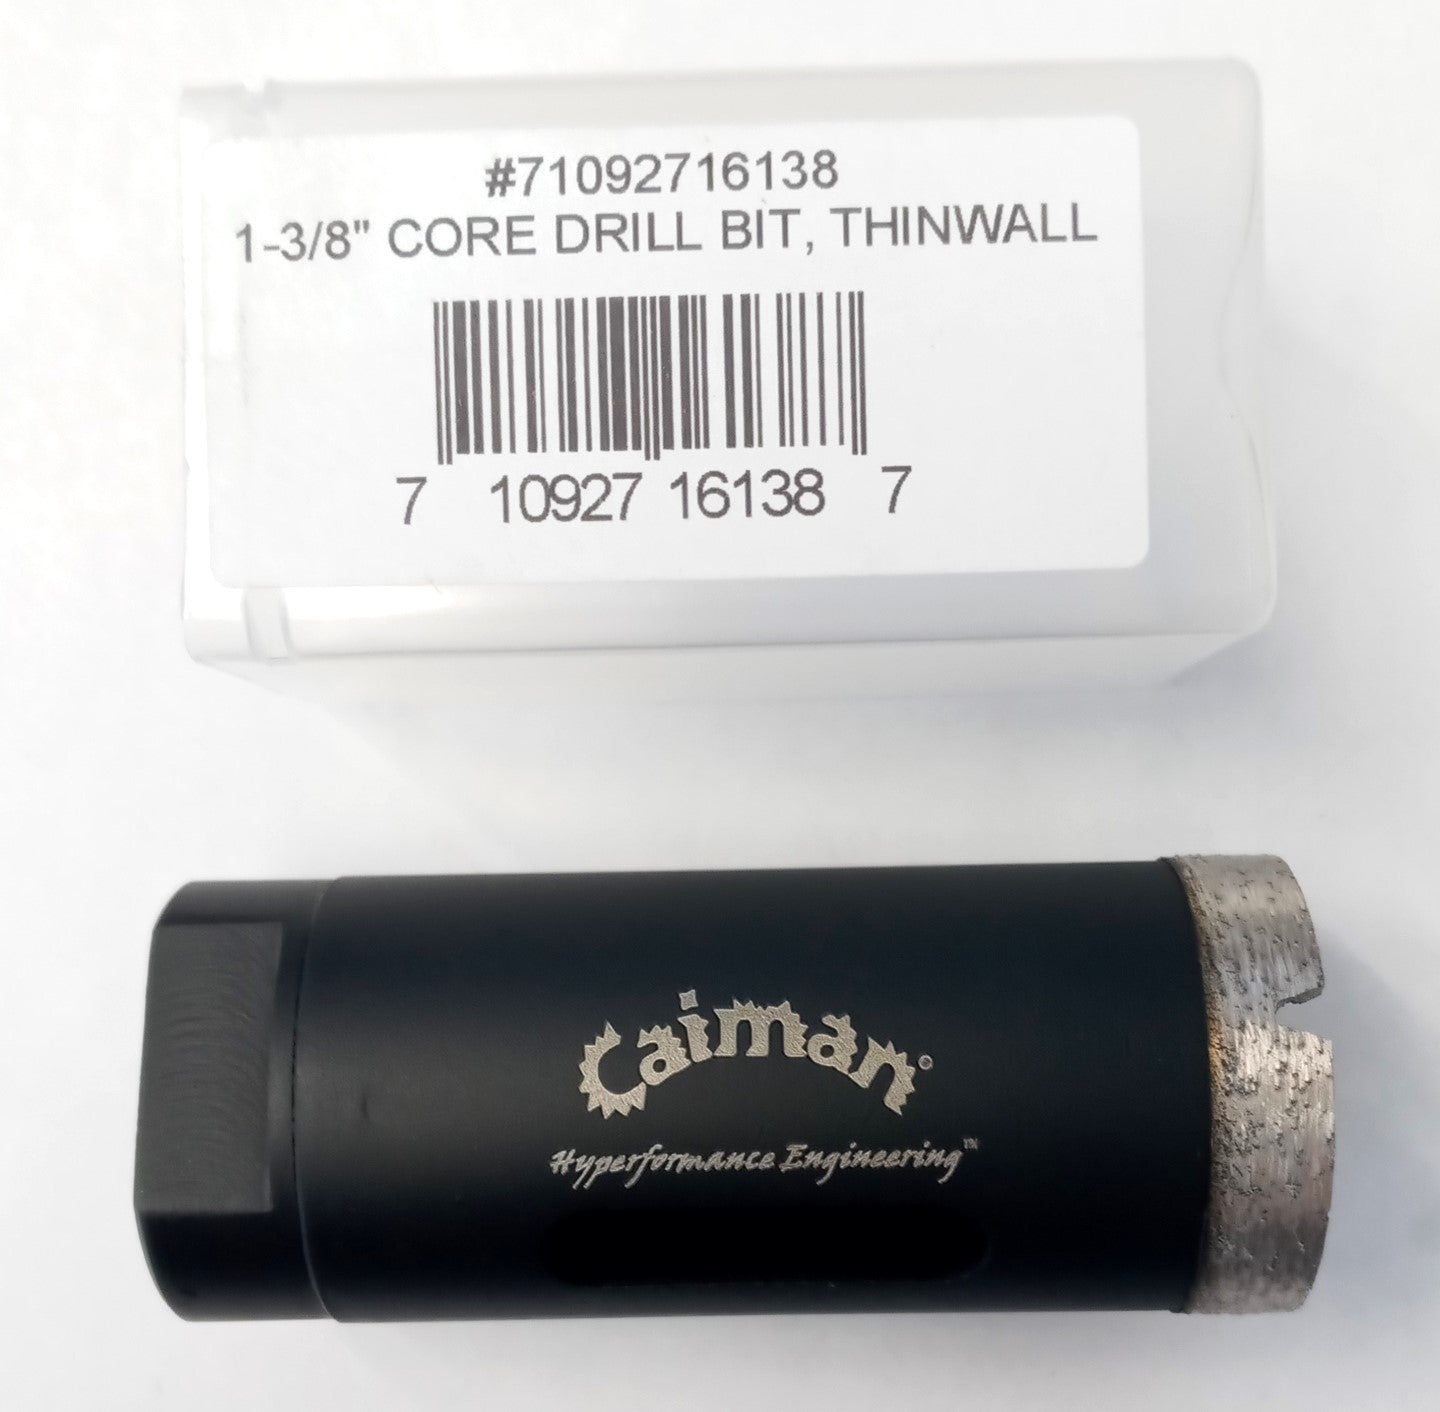 Caiman 16138 1-3/8" Thin Wall Core Drill Bit